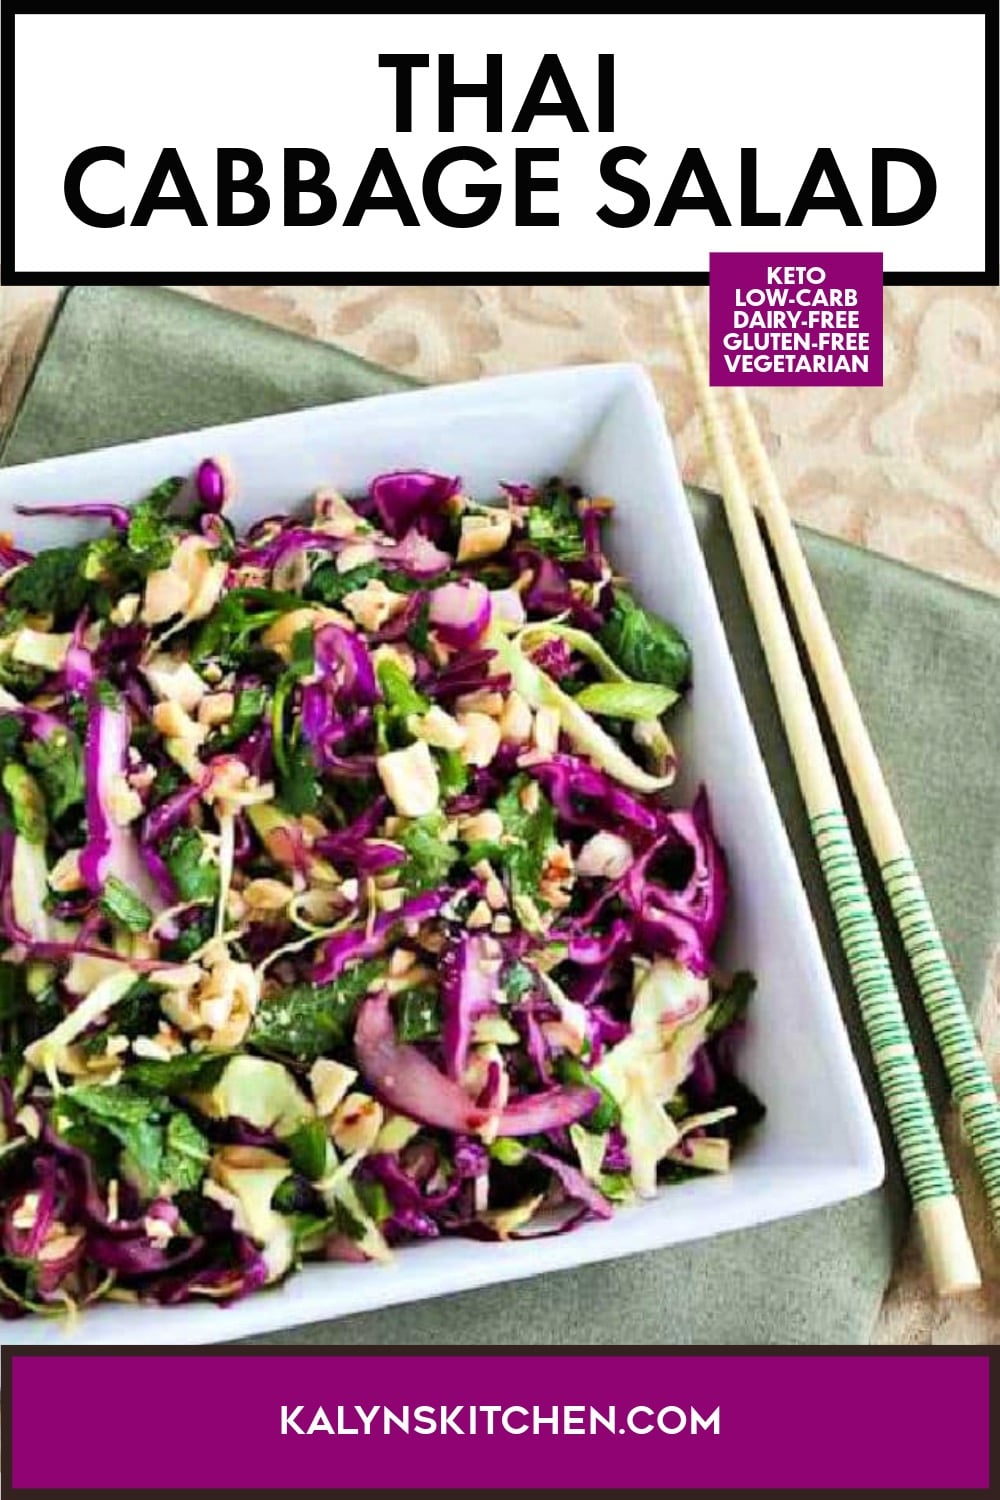 Pinterest image of Thai Cabbage Salad